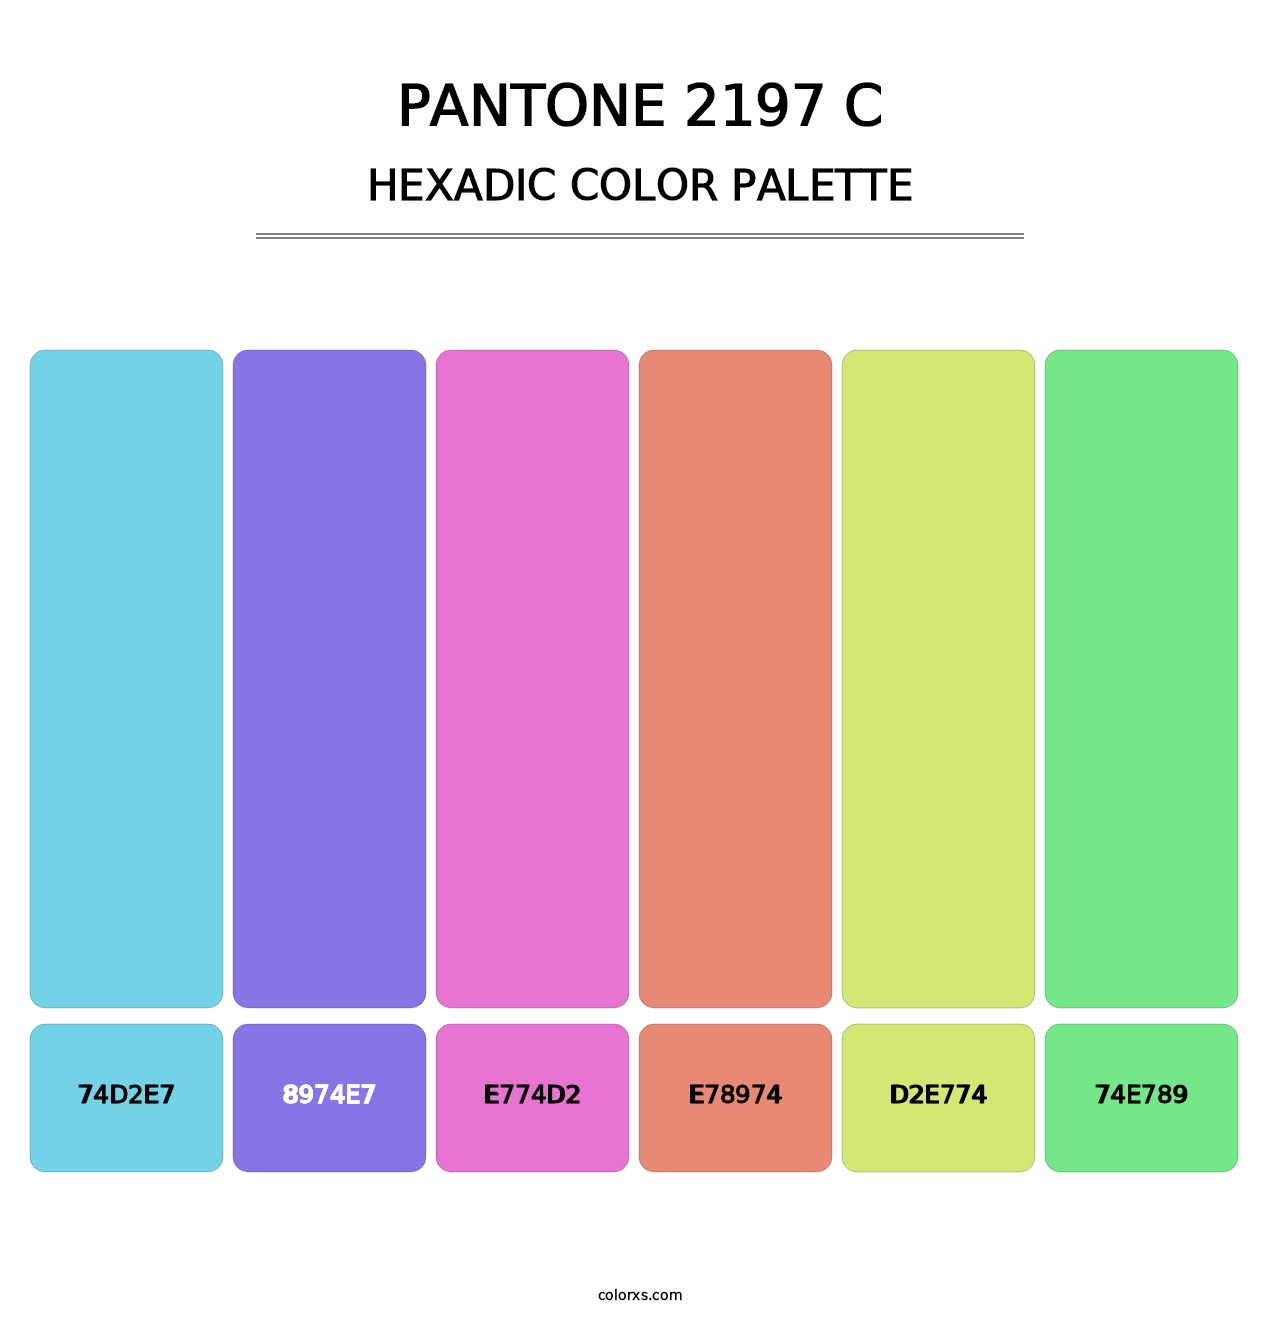 PANTONE 2197 C - Hexadic Color Palette